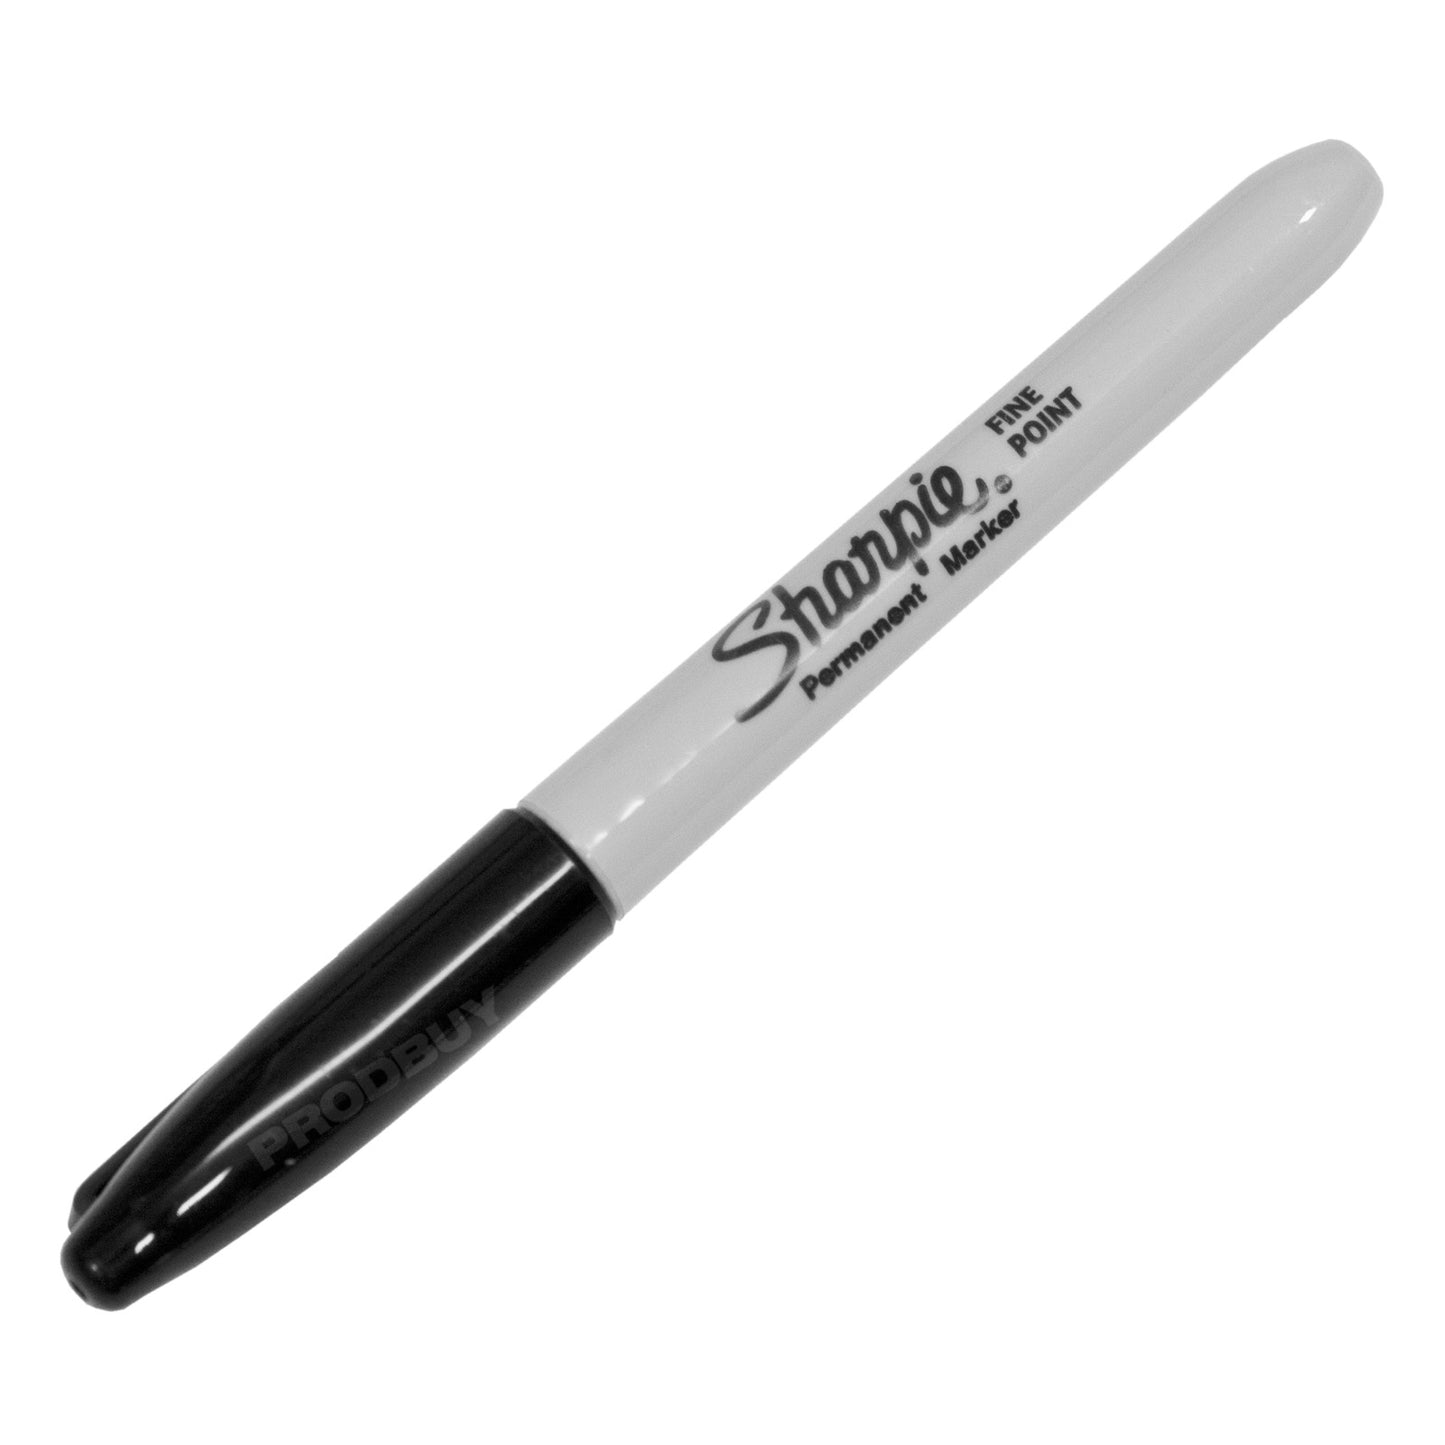 Set of 3 Sharpie Fine Permanent Marker Pens with Black Colour Ink